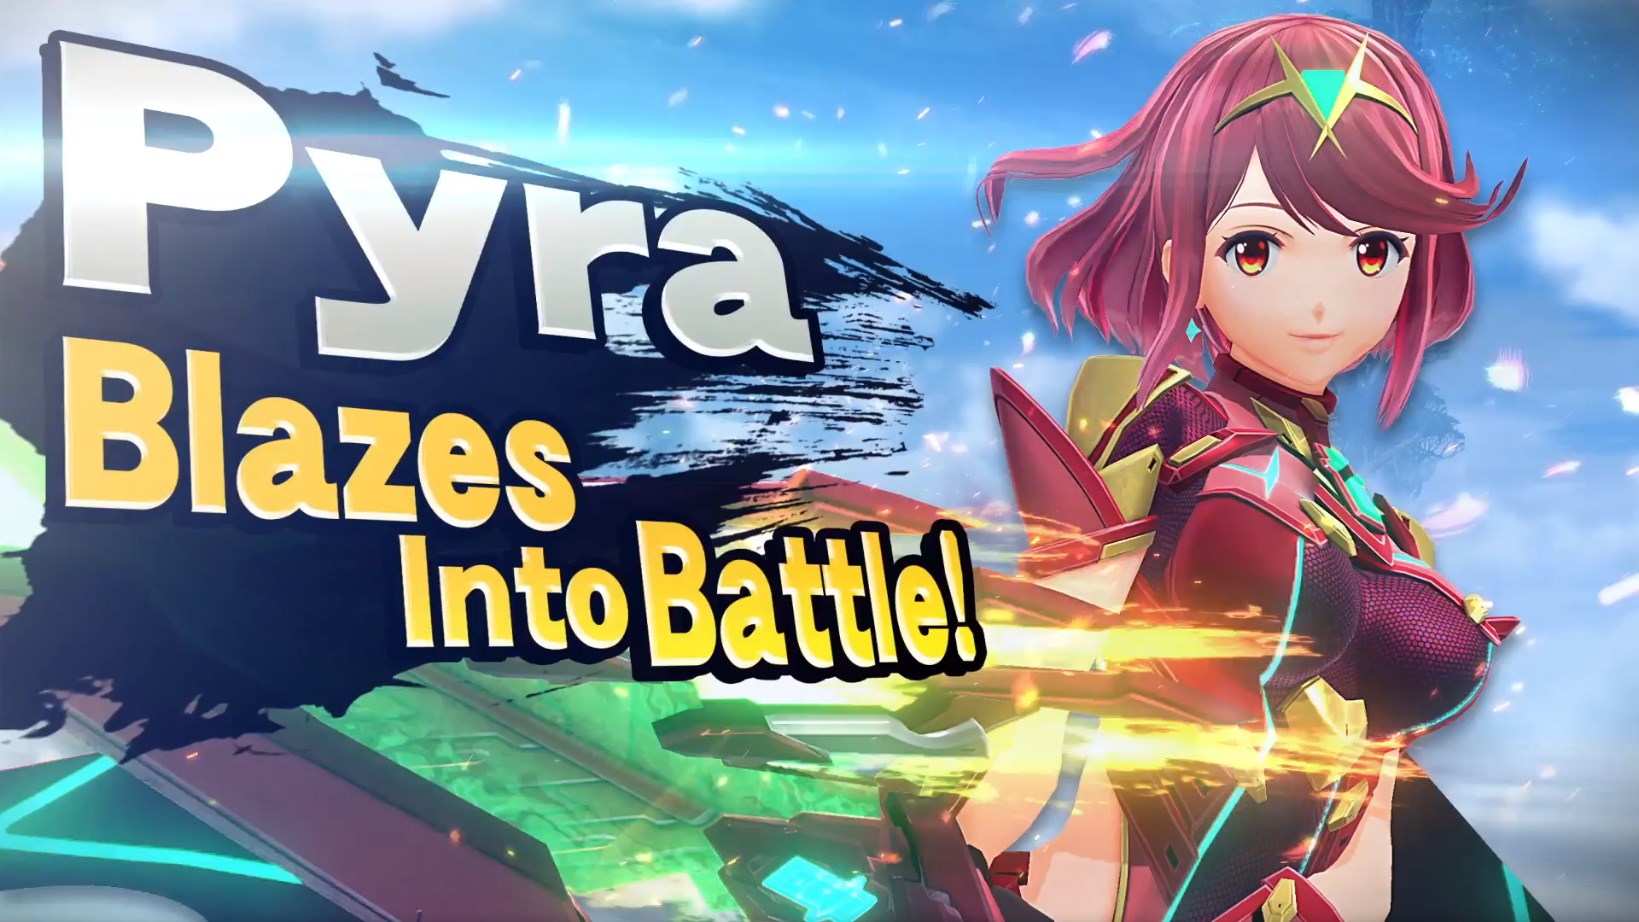 Pyra Blazes Into Super Smash Bros Ultimate